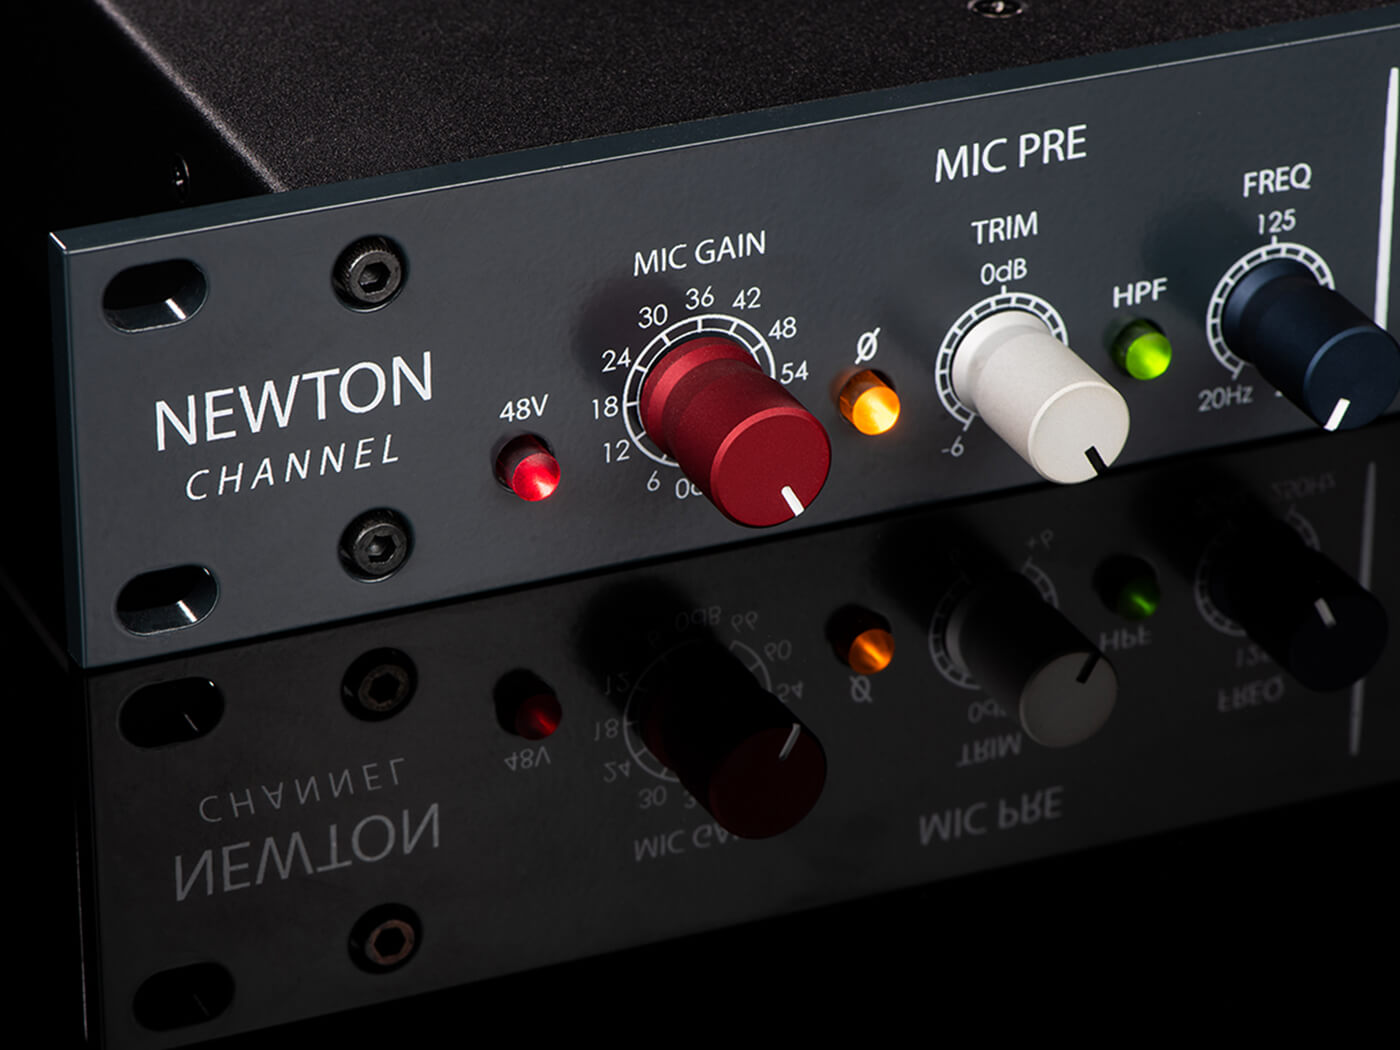 Rupert Neve Designs’ Newton Channel mic preamp